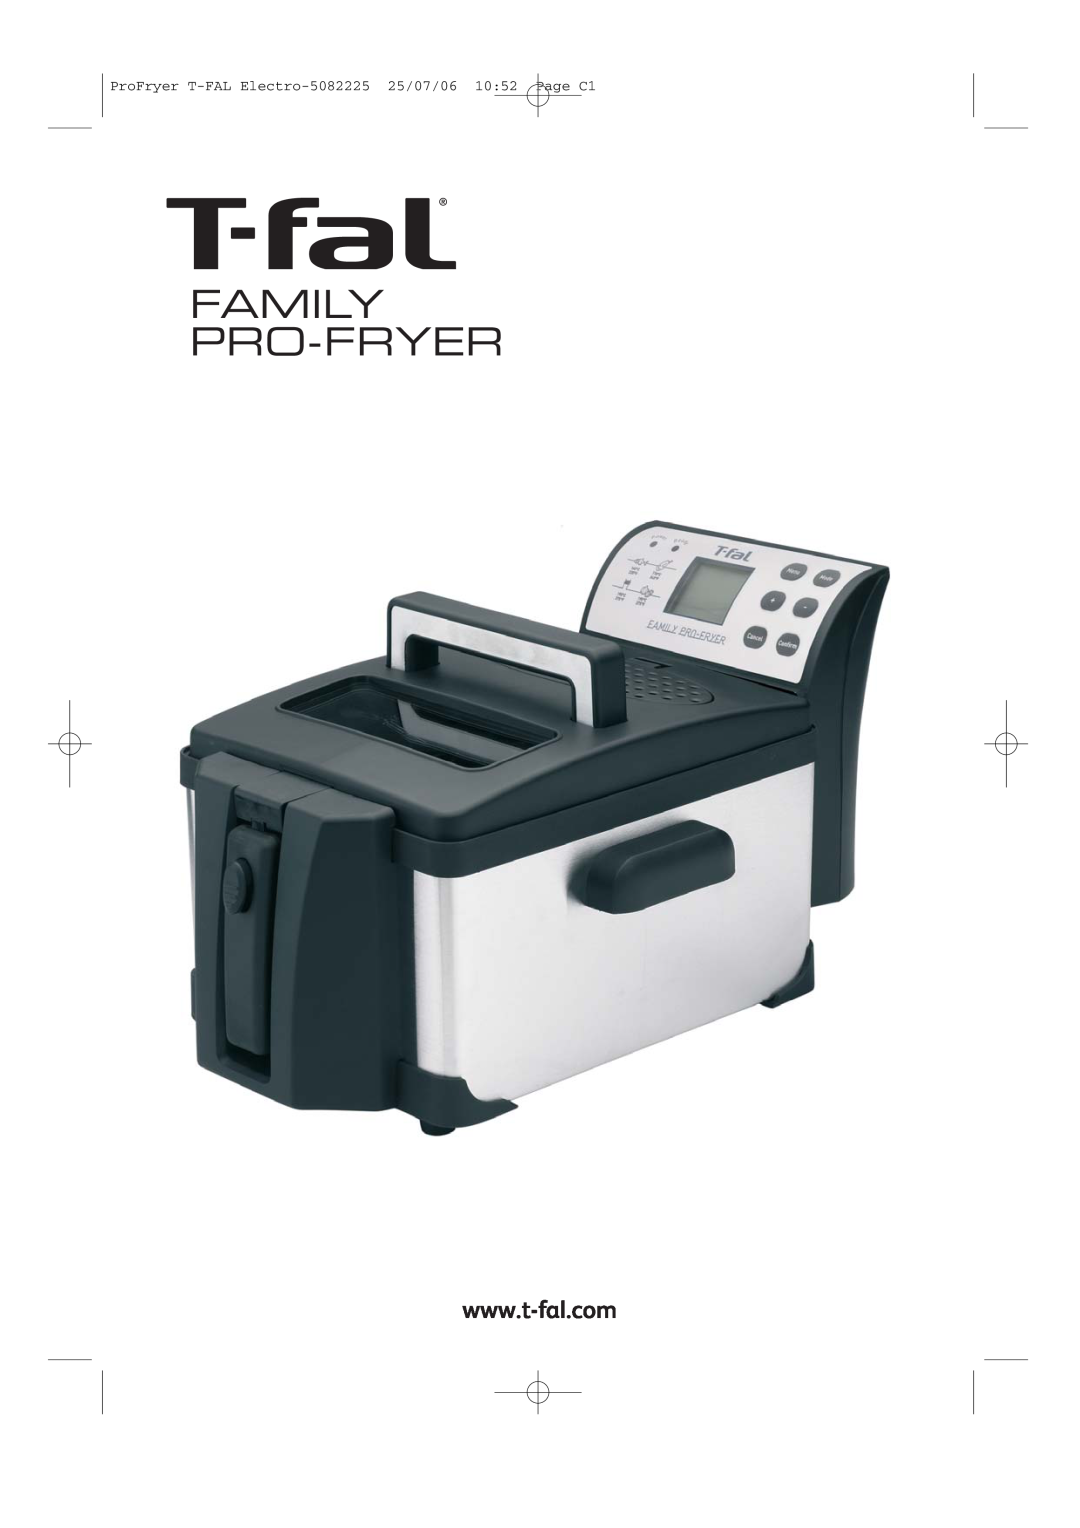 T-Fal Family Pro-Fryer manual ProFryer T-FAL Electro-5082225 25/07/06 1052 Page C1 